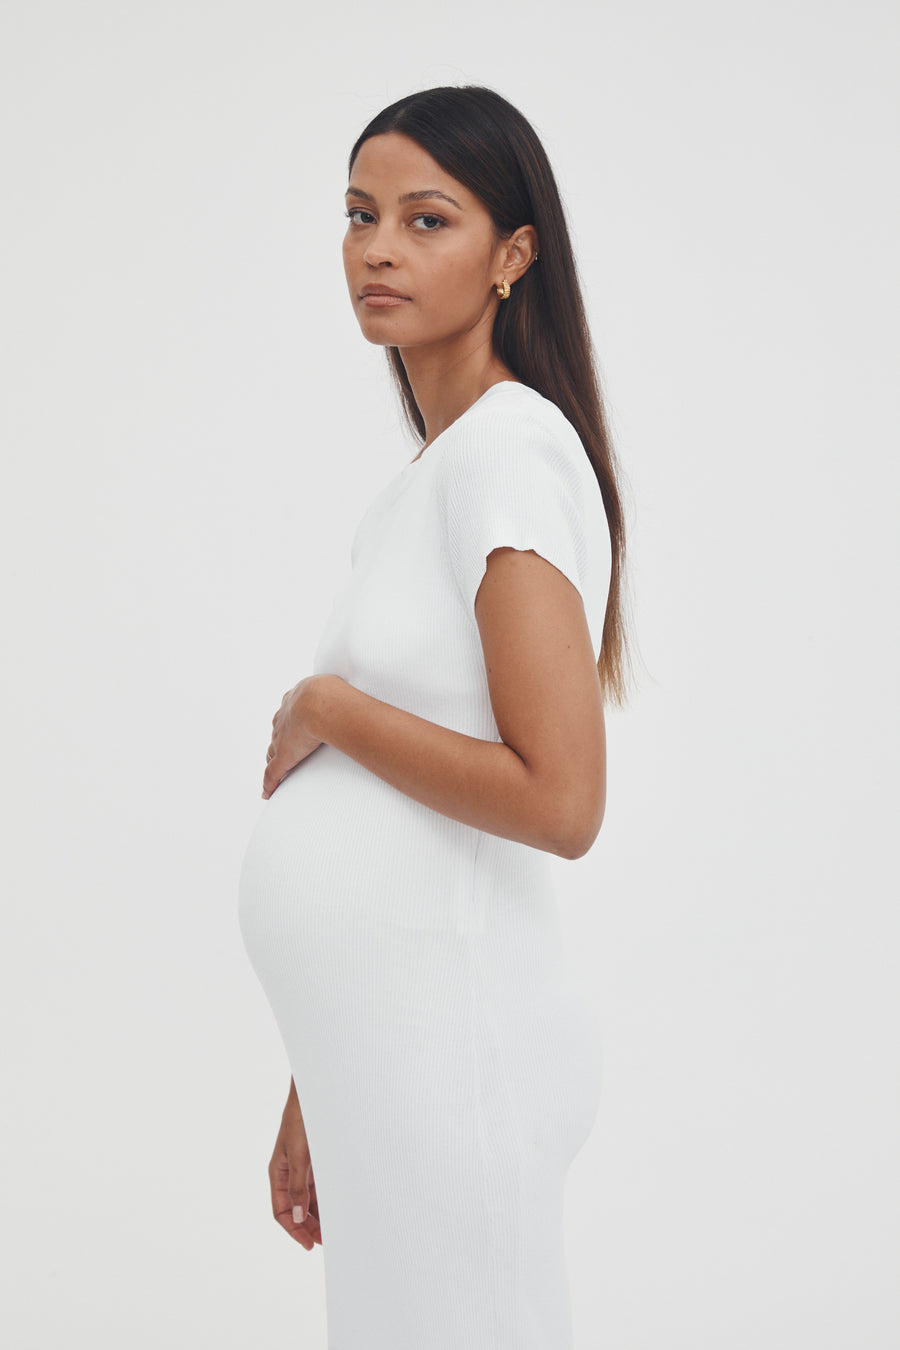 Stylish Babyshower Dress (White) 8